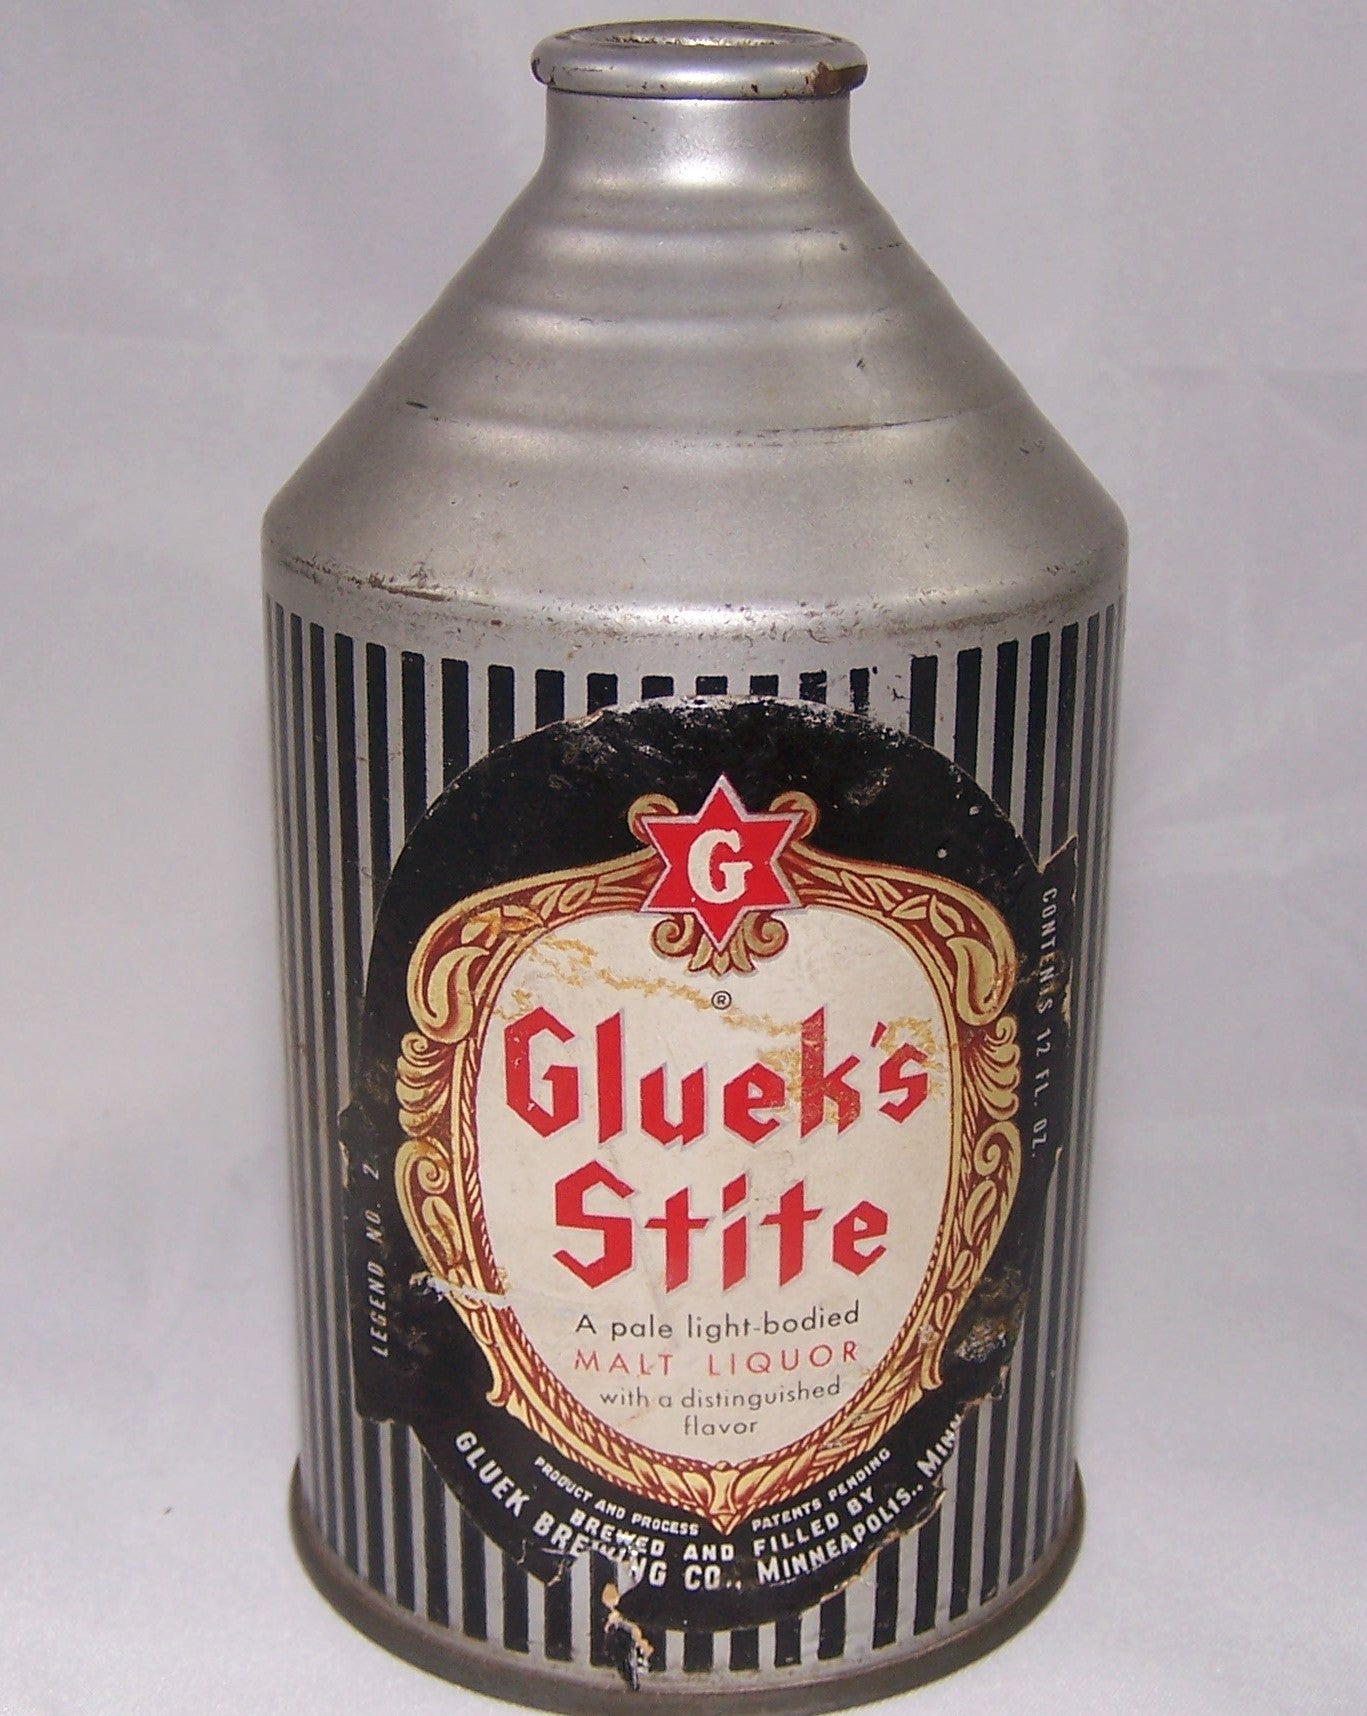 Gluek's Stite Malt Liquor Paper Label, USBC 194-28, Grade 1/1- Sold on 08/05/17